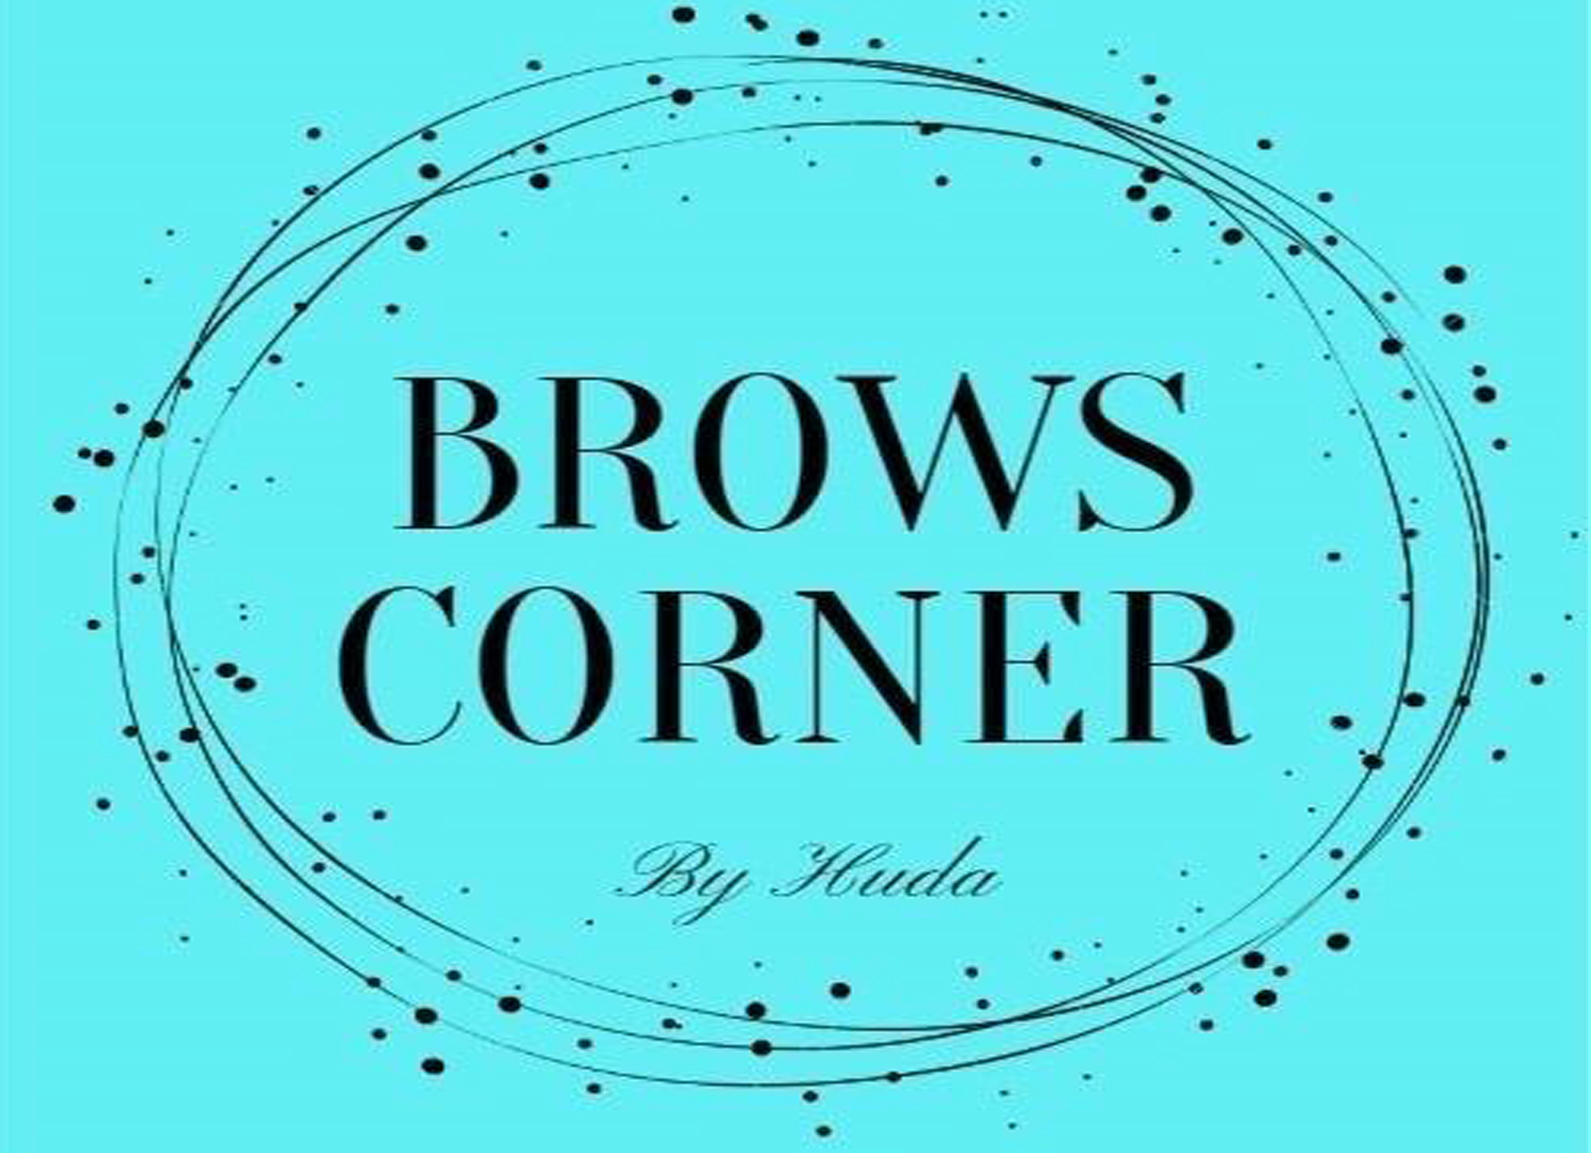 Brows Corner by Huda